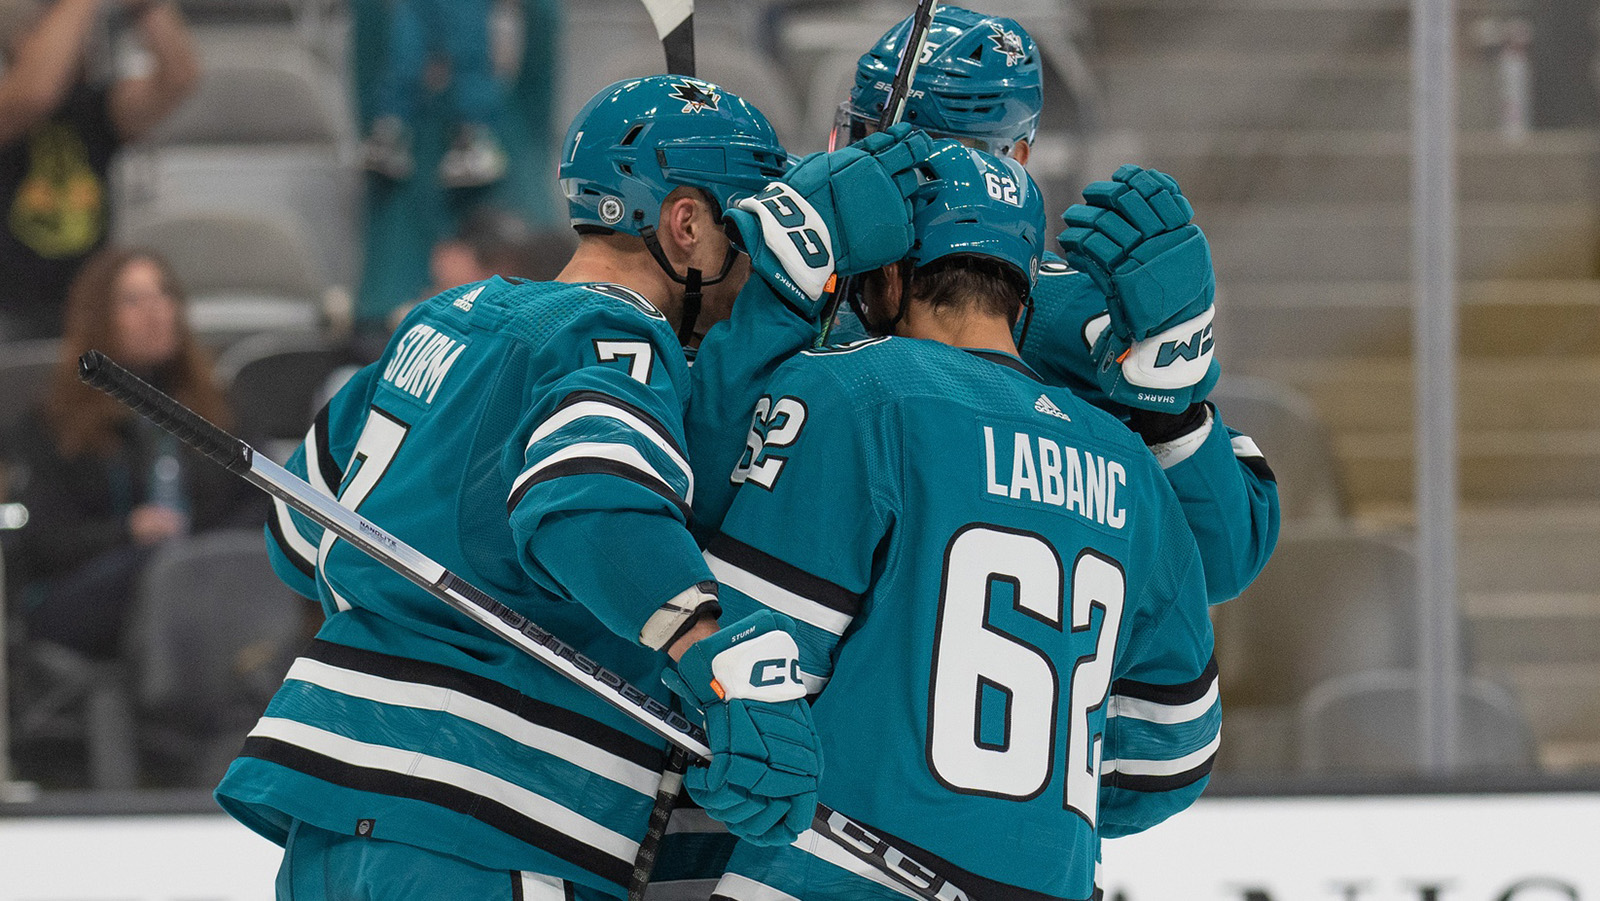 Captain's back: Joe Pavelski leads Sharks to Game 7 win